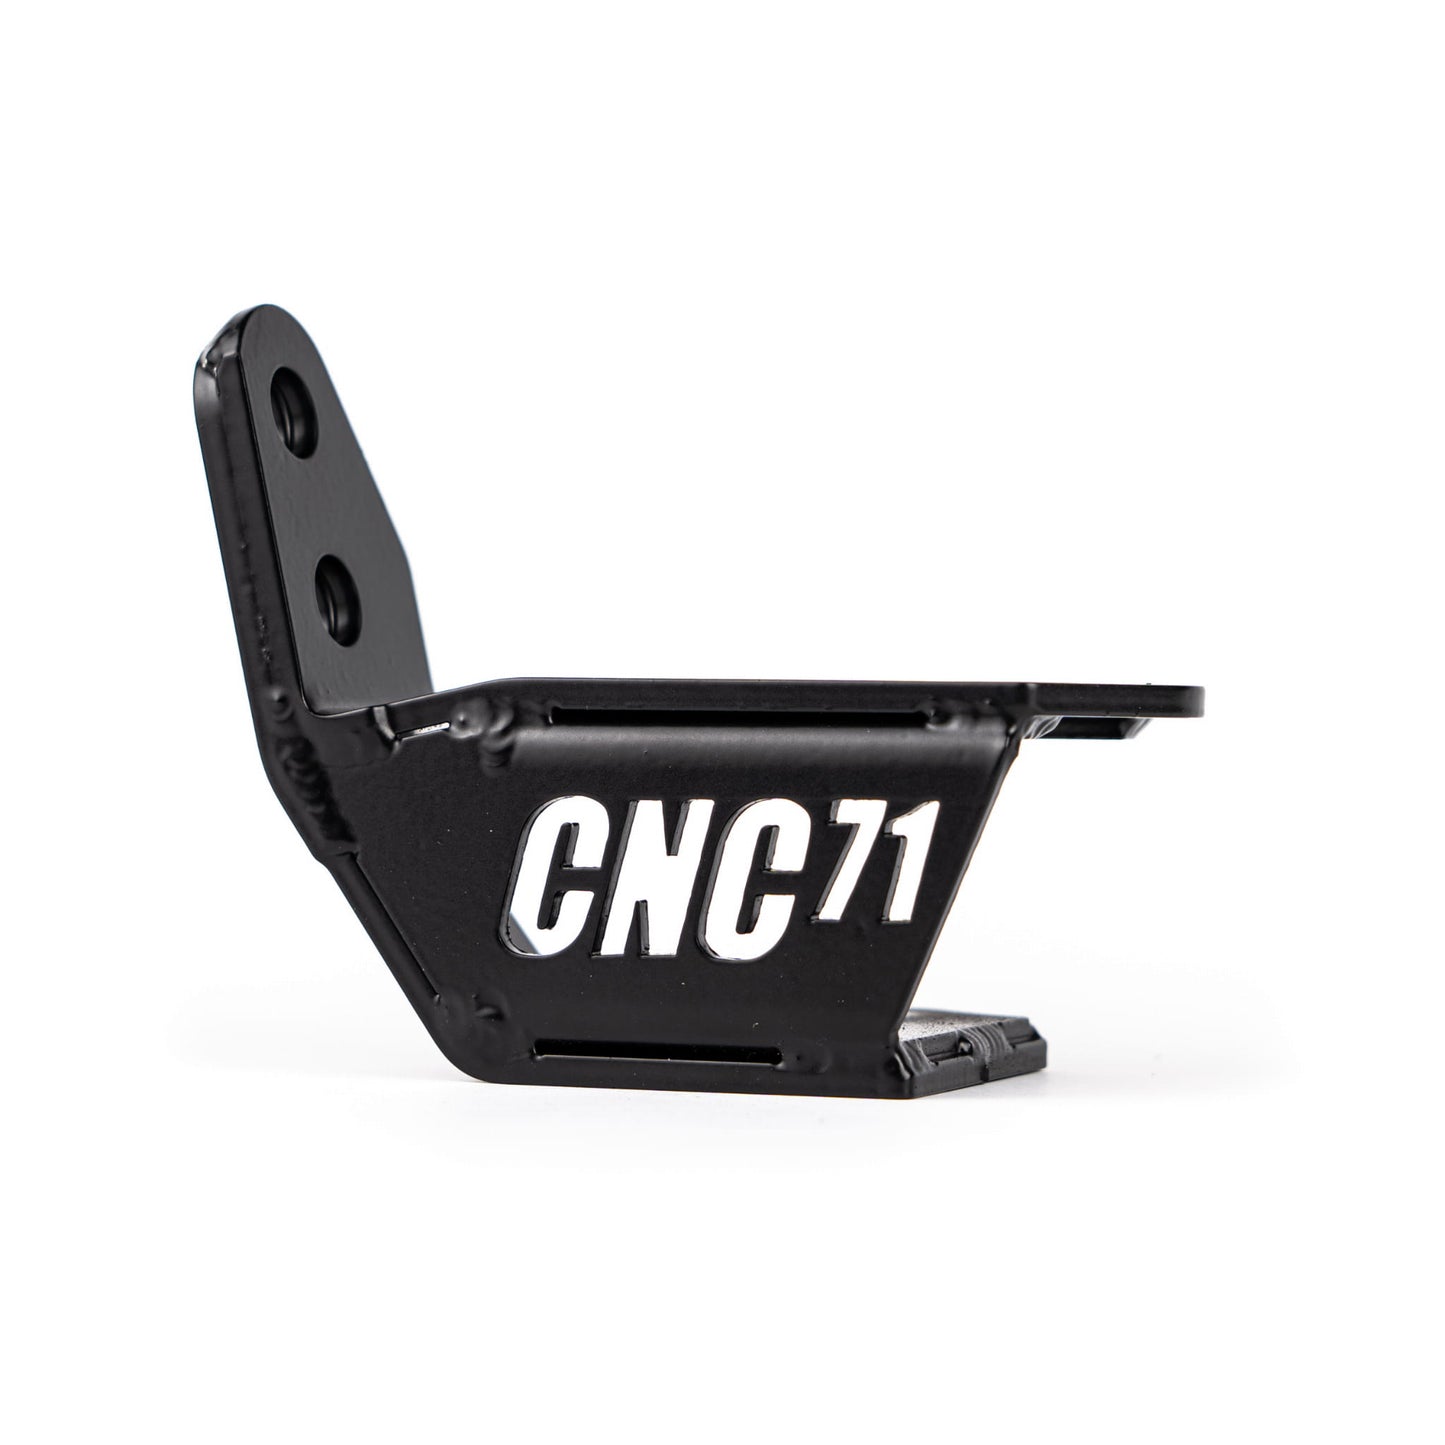 CNC71 - LOCK ADAPTER NISSAN 350Z/INFINITI G35